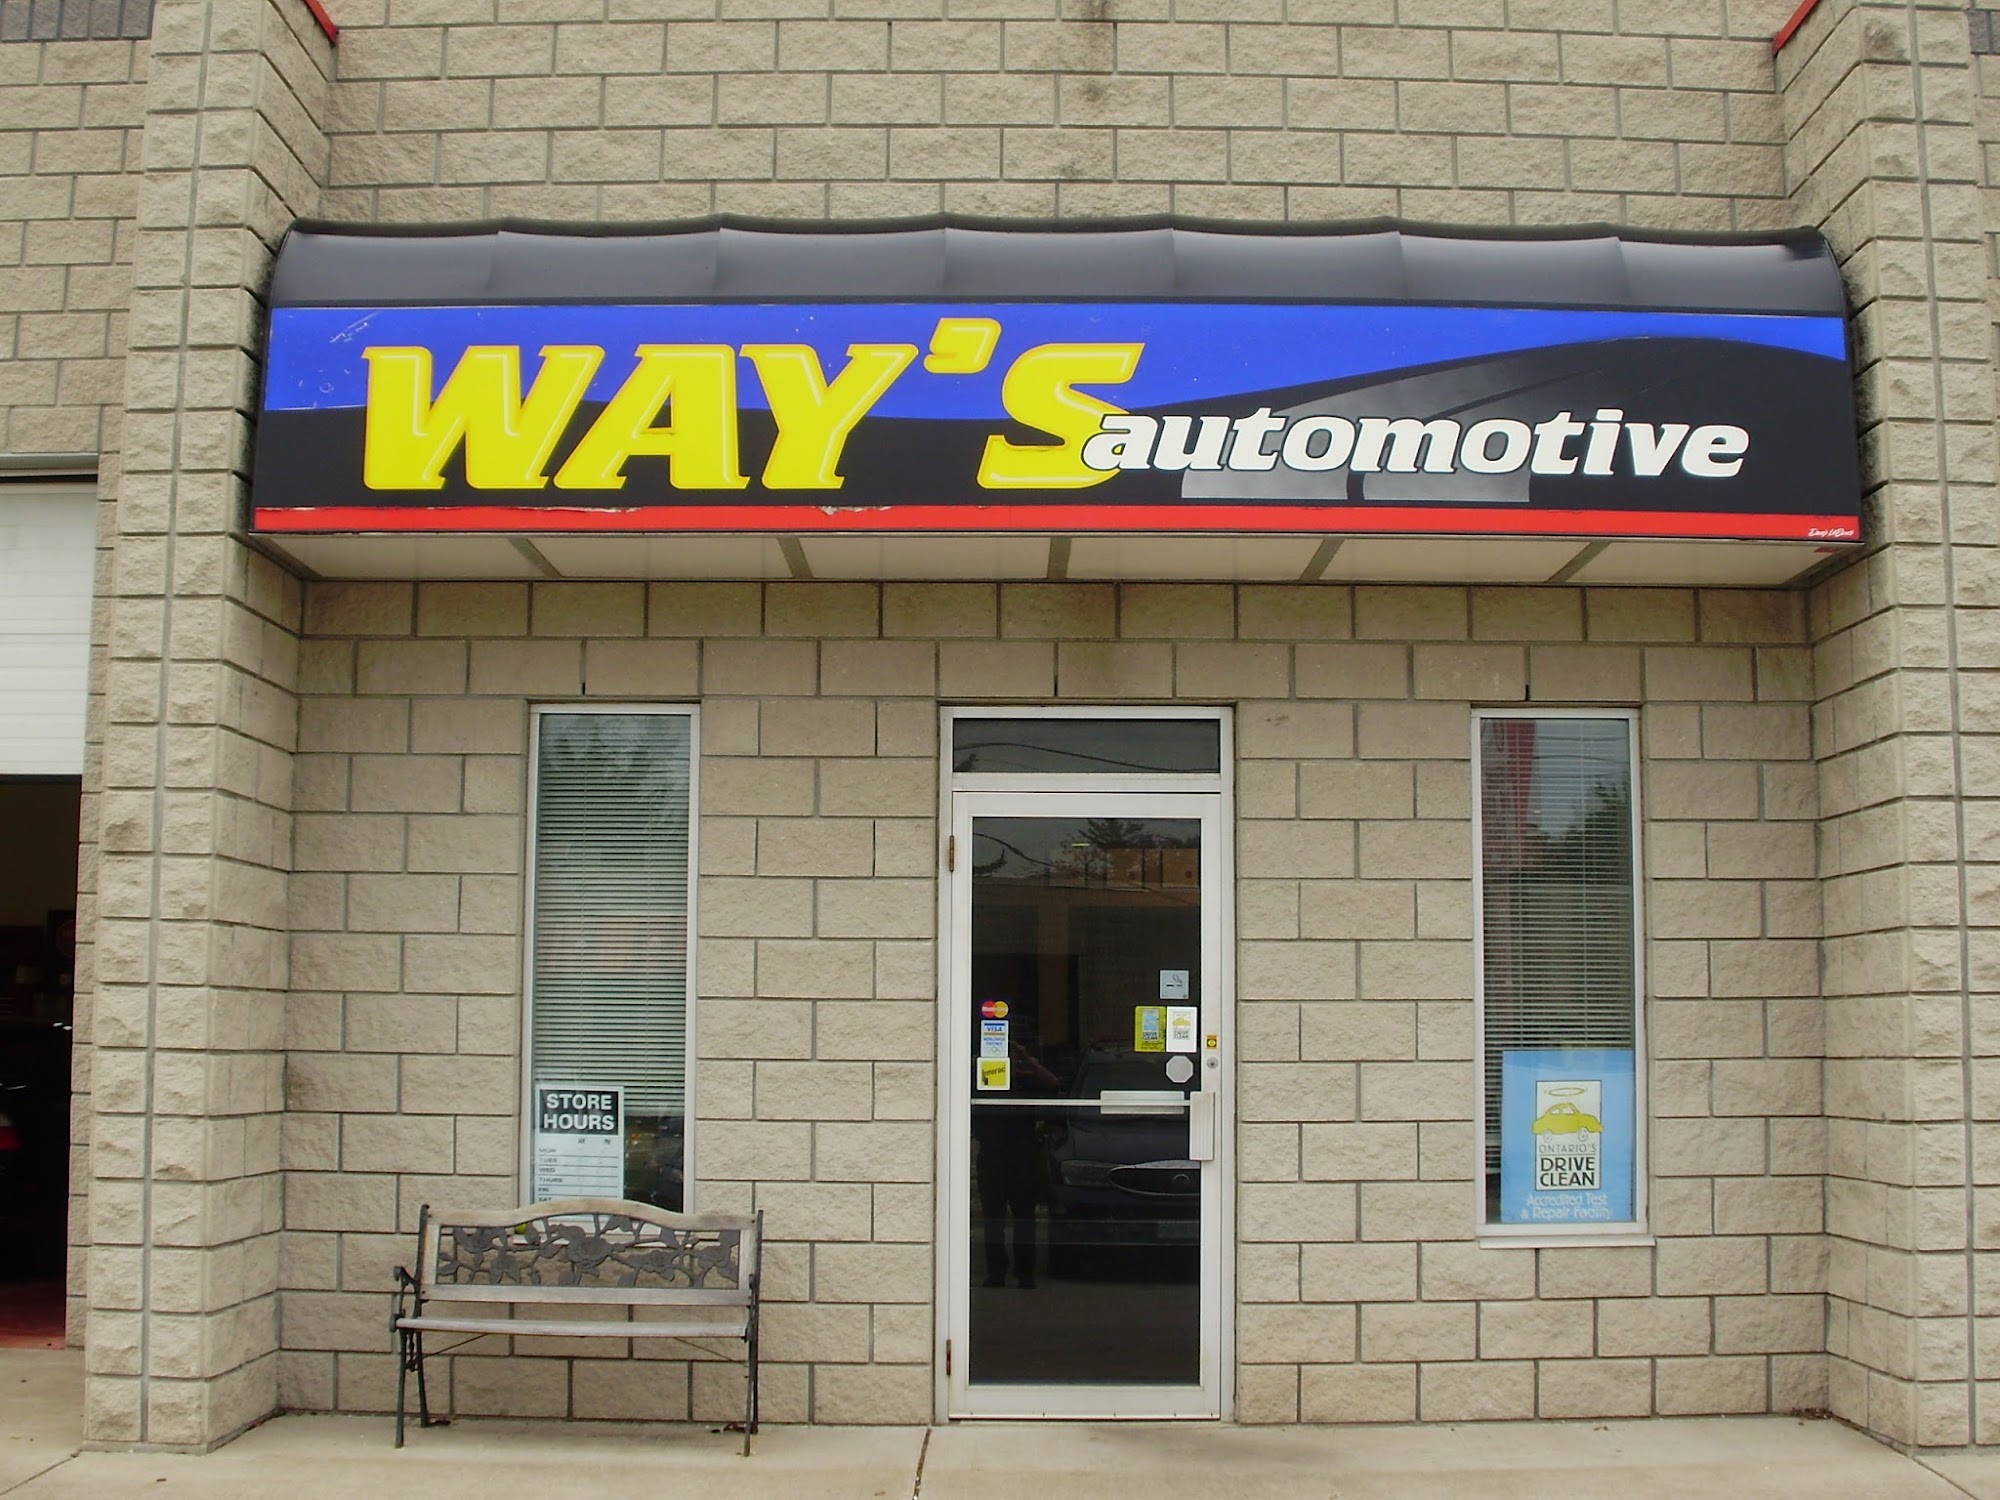 Way's Automotive Service